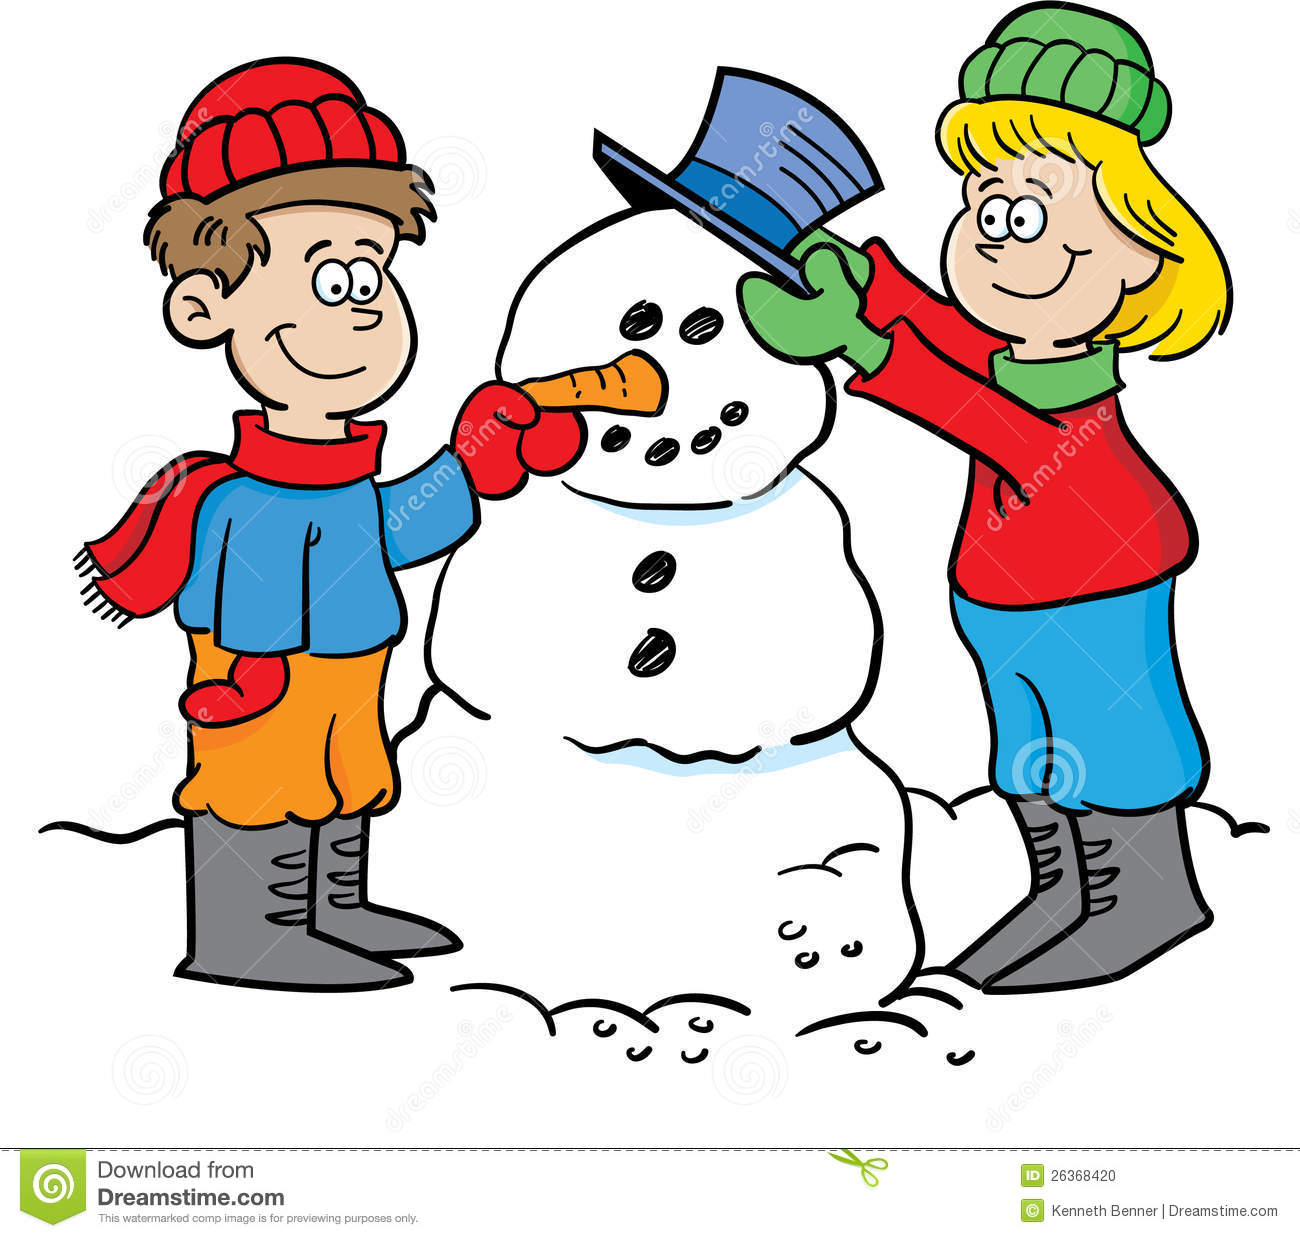 Cartoon Illustration Of Two Children Building A Snowman